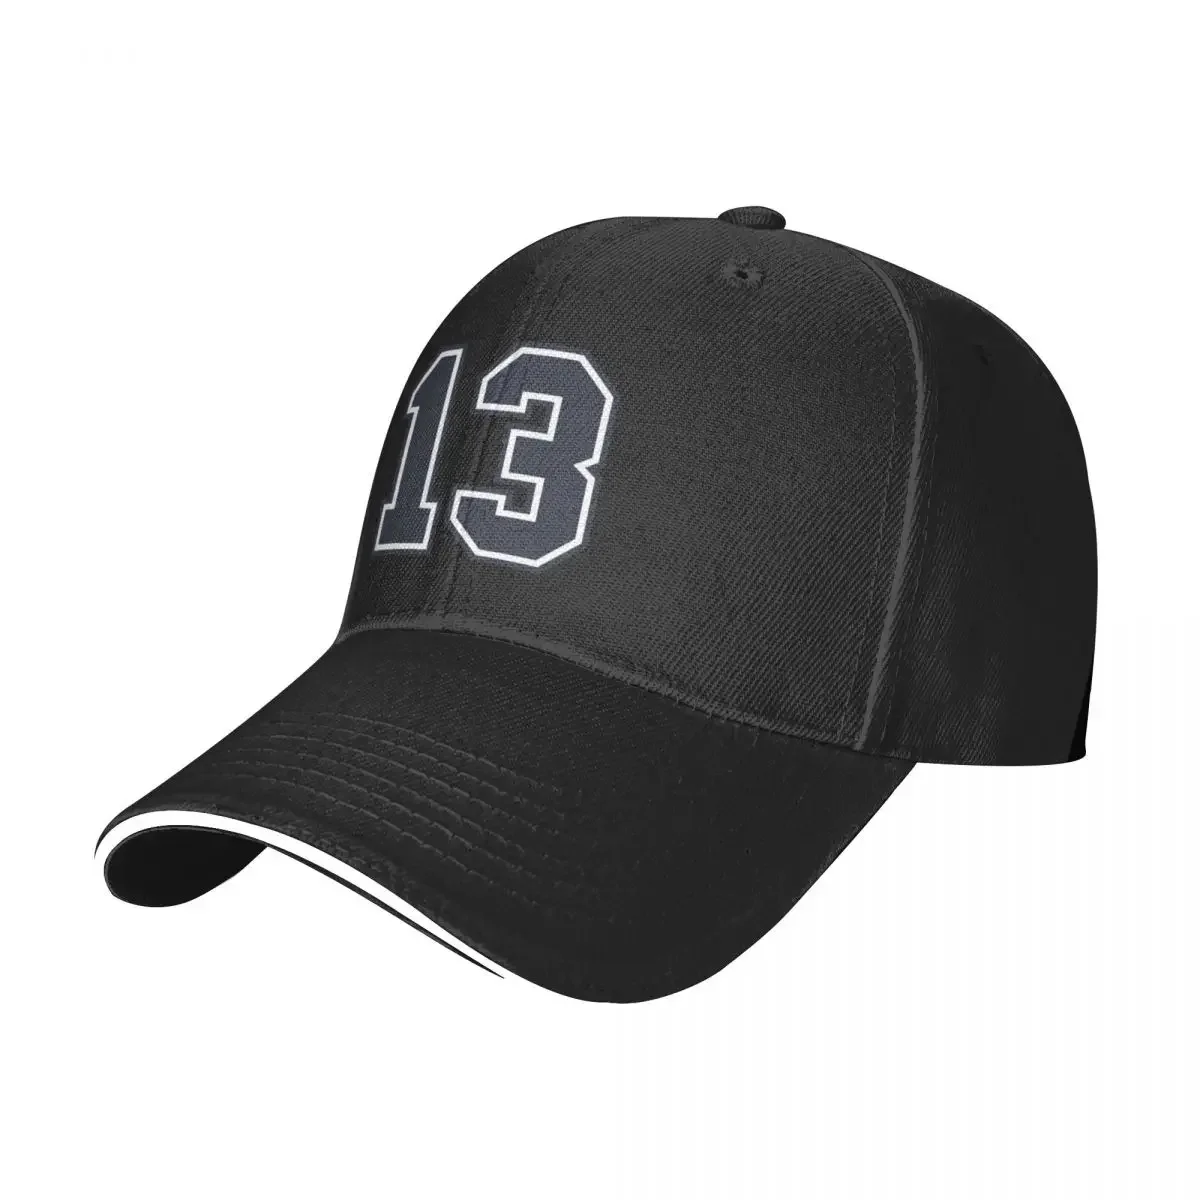 13 Sports Number Thirteen Baseball Cap hiking hat Hat Man Luxury sun hat Hats Woman Men's